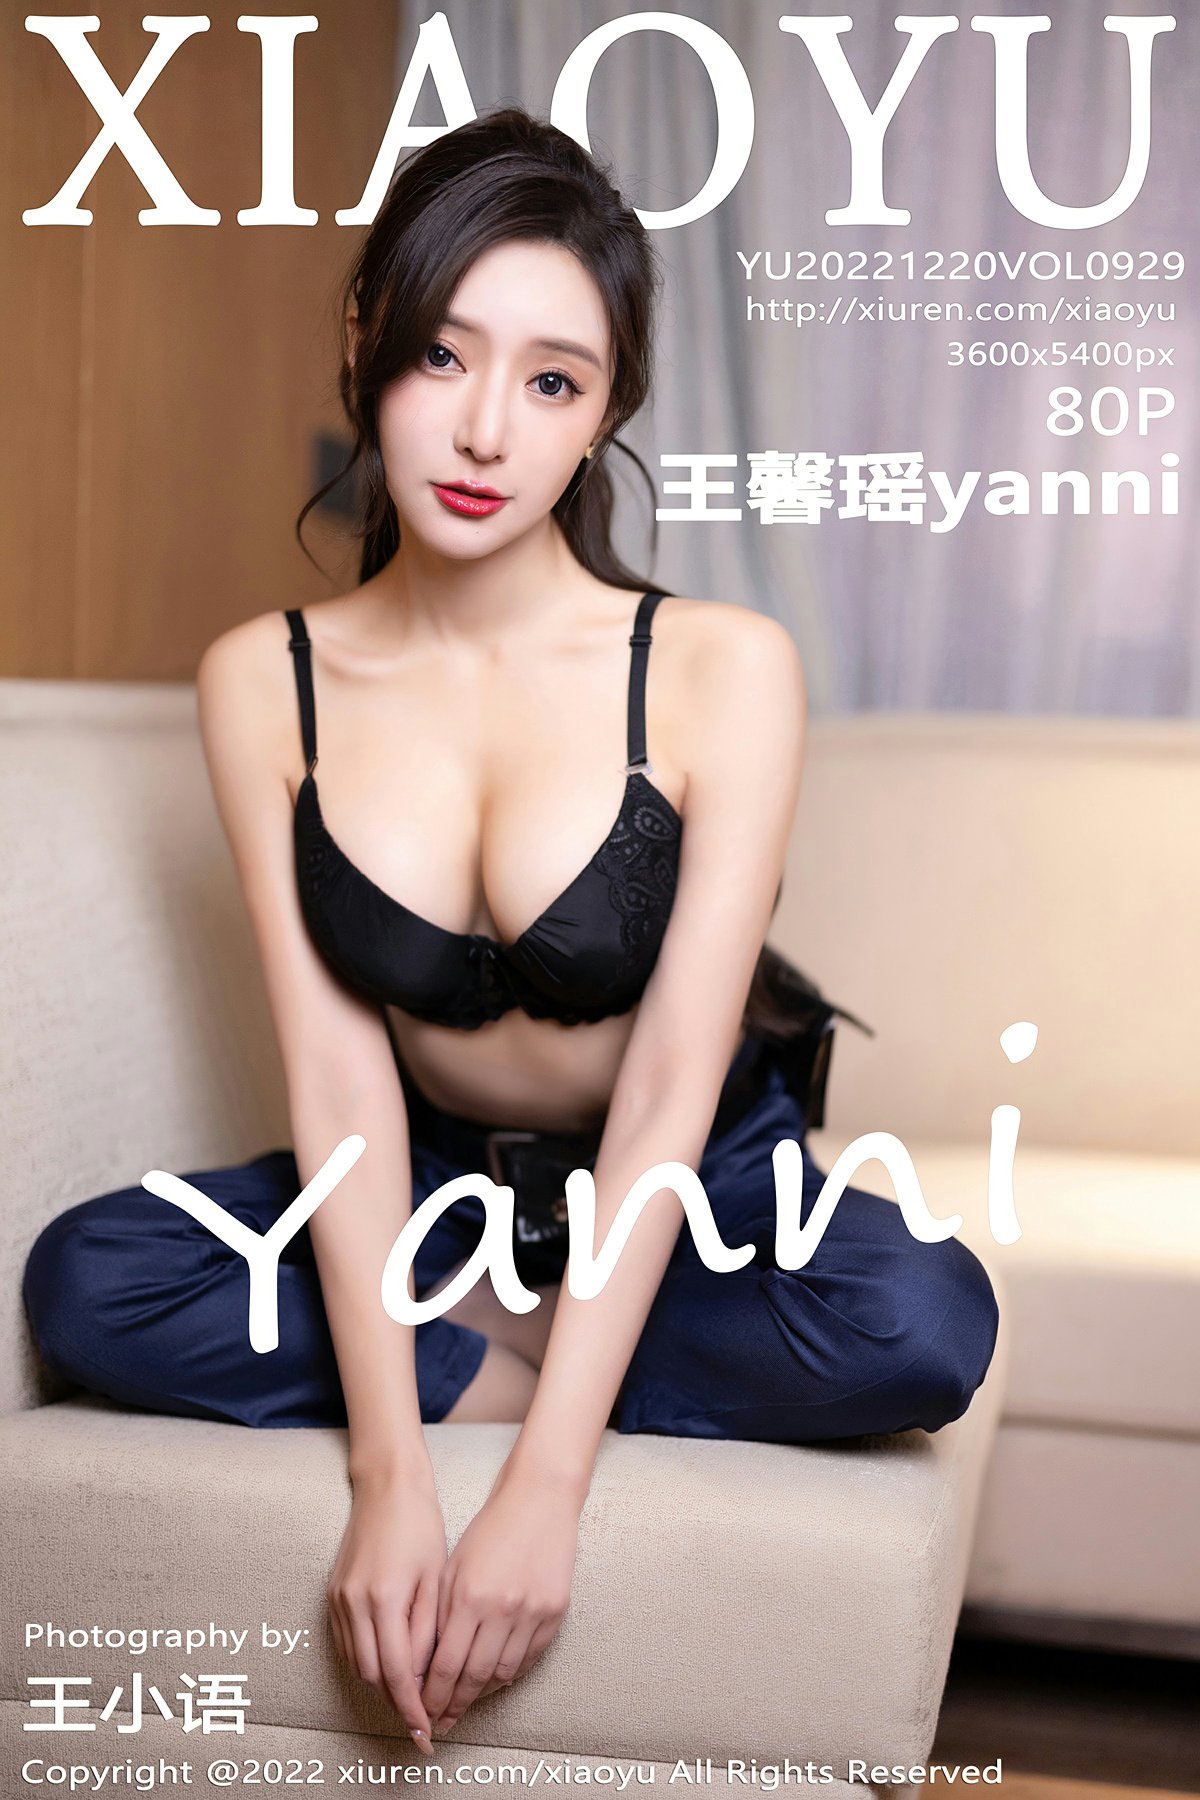 [XIAOYU语画界] VOL.929 王馨瑶yanni1 